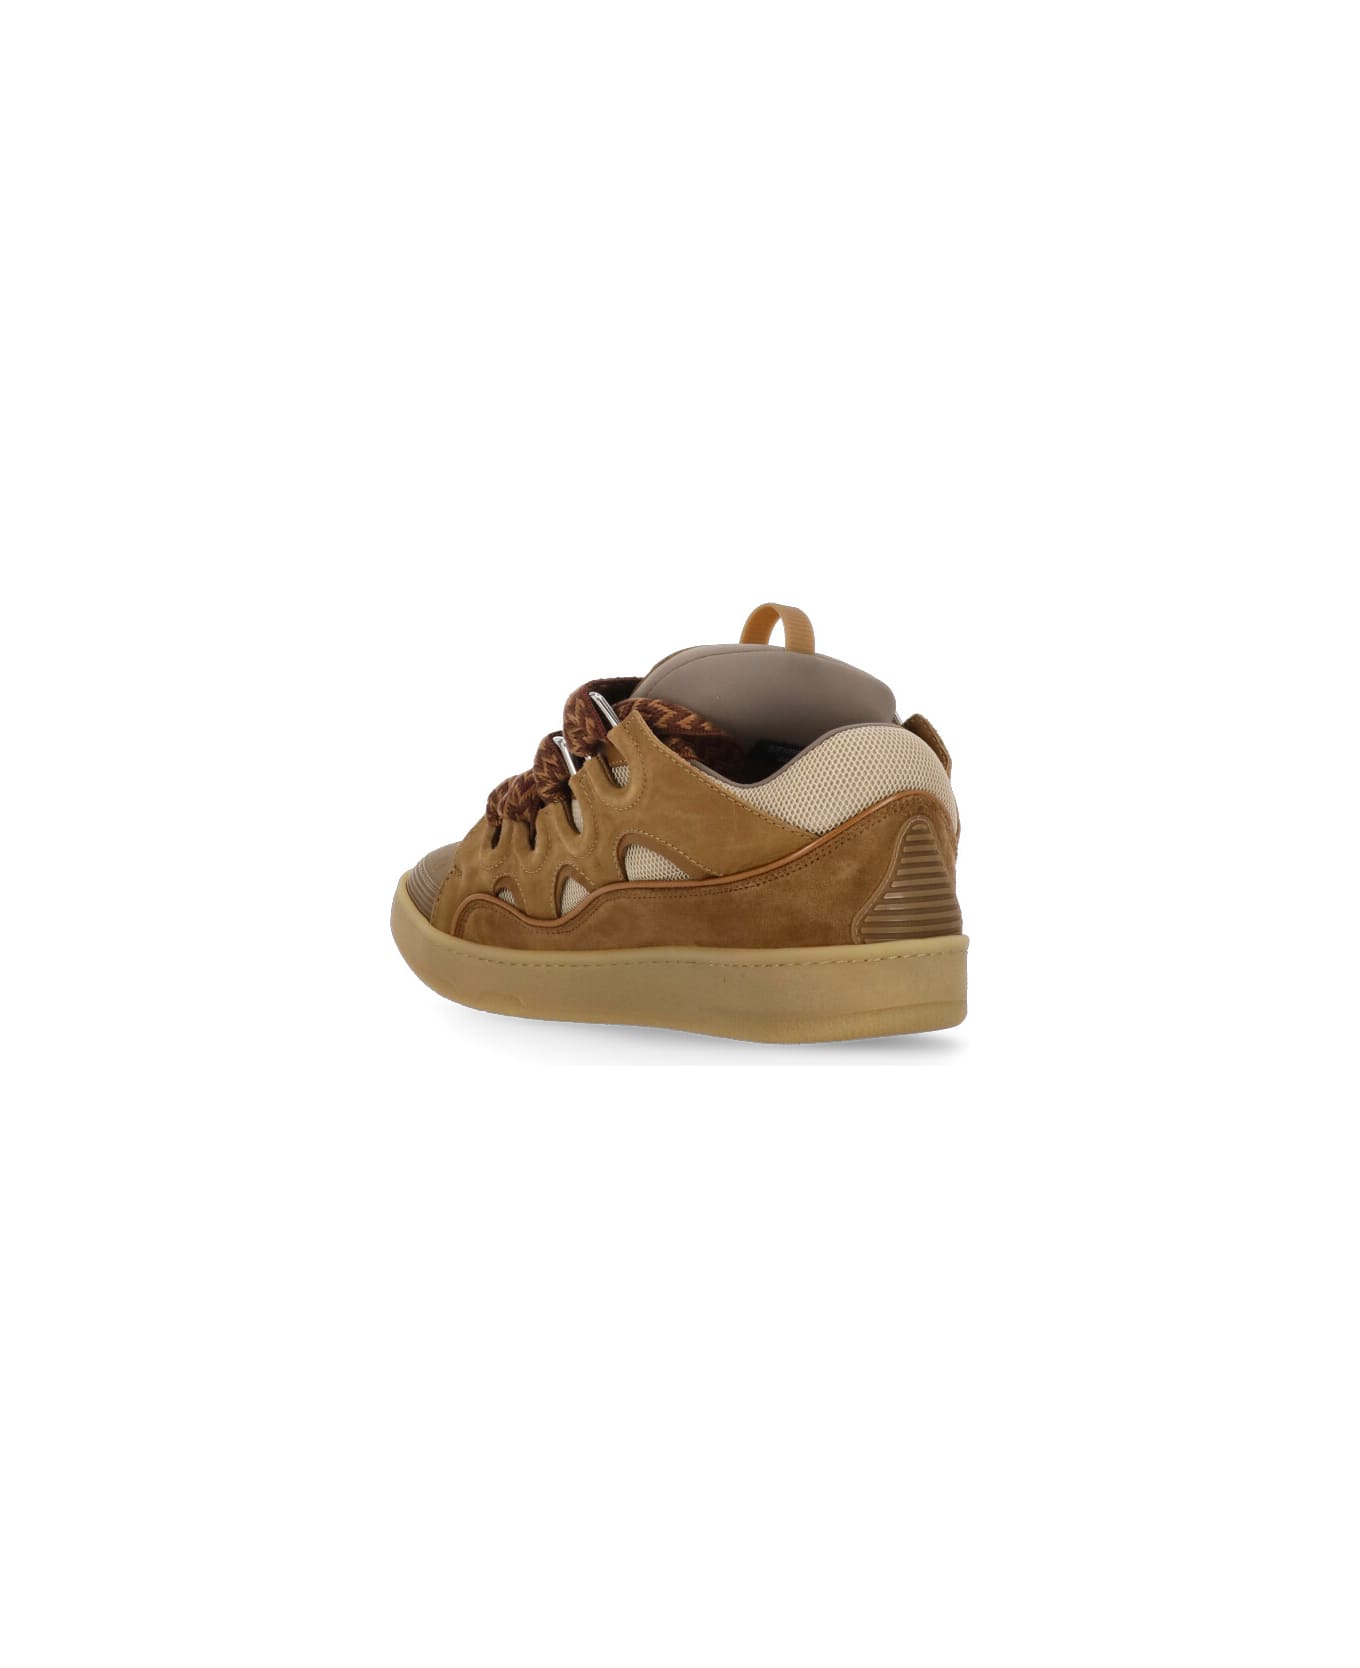 Lanvin Curb Sneakers - Brown